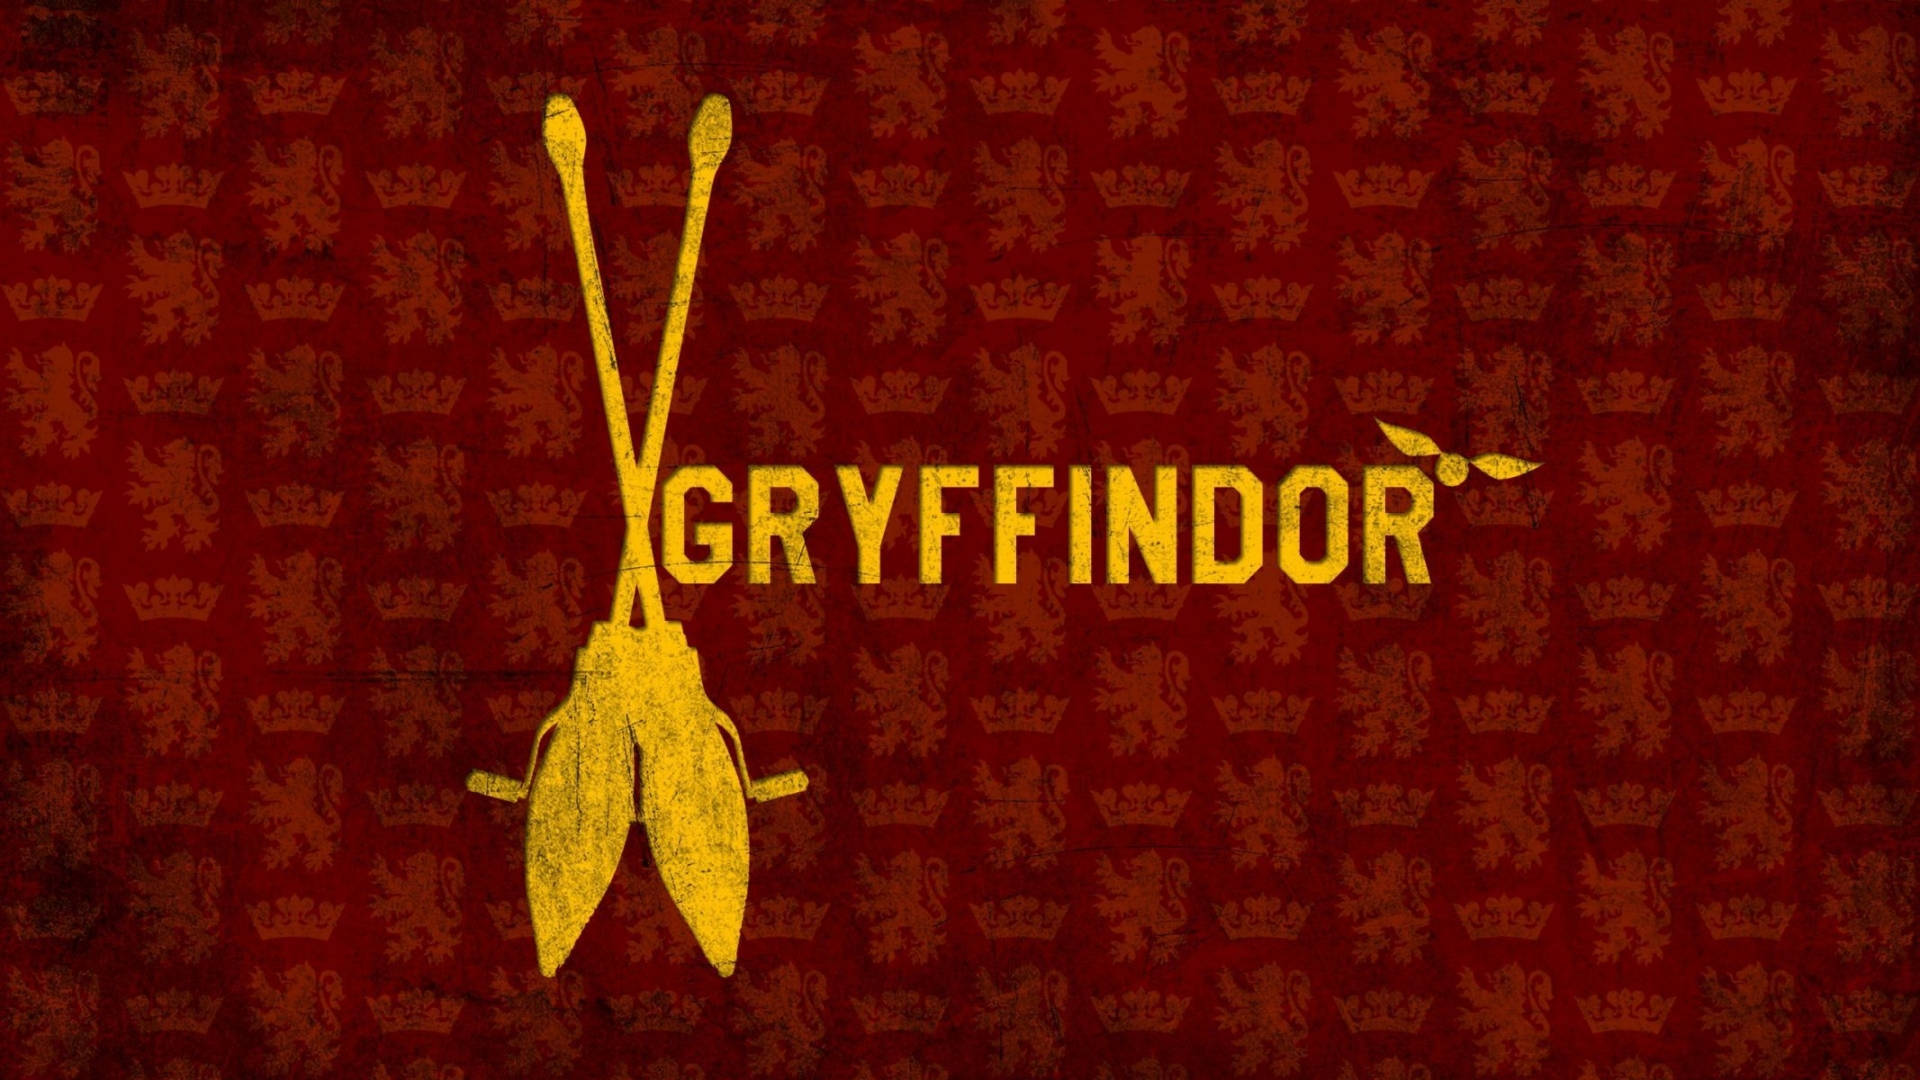 Harry Potter Houses Gryffindor Quidditch Background